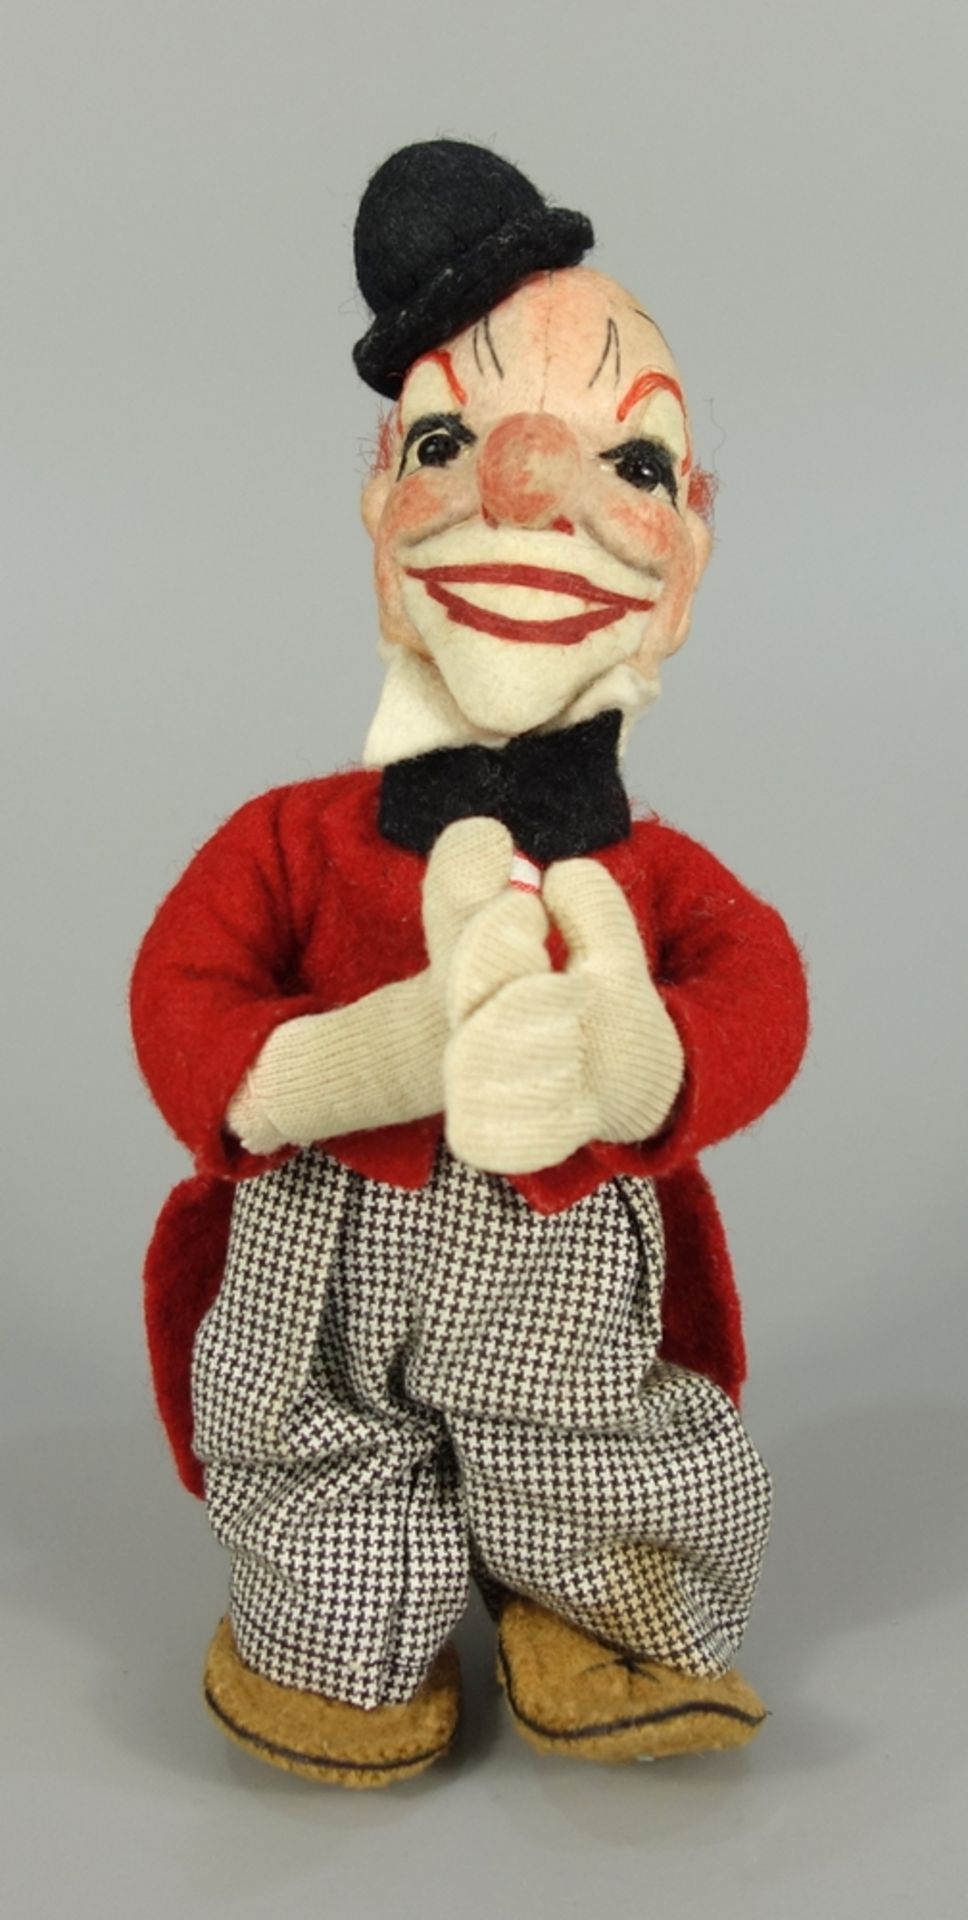 Dresdner Künstlerpuppe "Clown", um 1950/60, H.17cm, Handarbeit, Biegepuppe, Filz/Stoff, gesticktes - Bild 2 aus 3